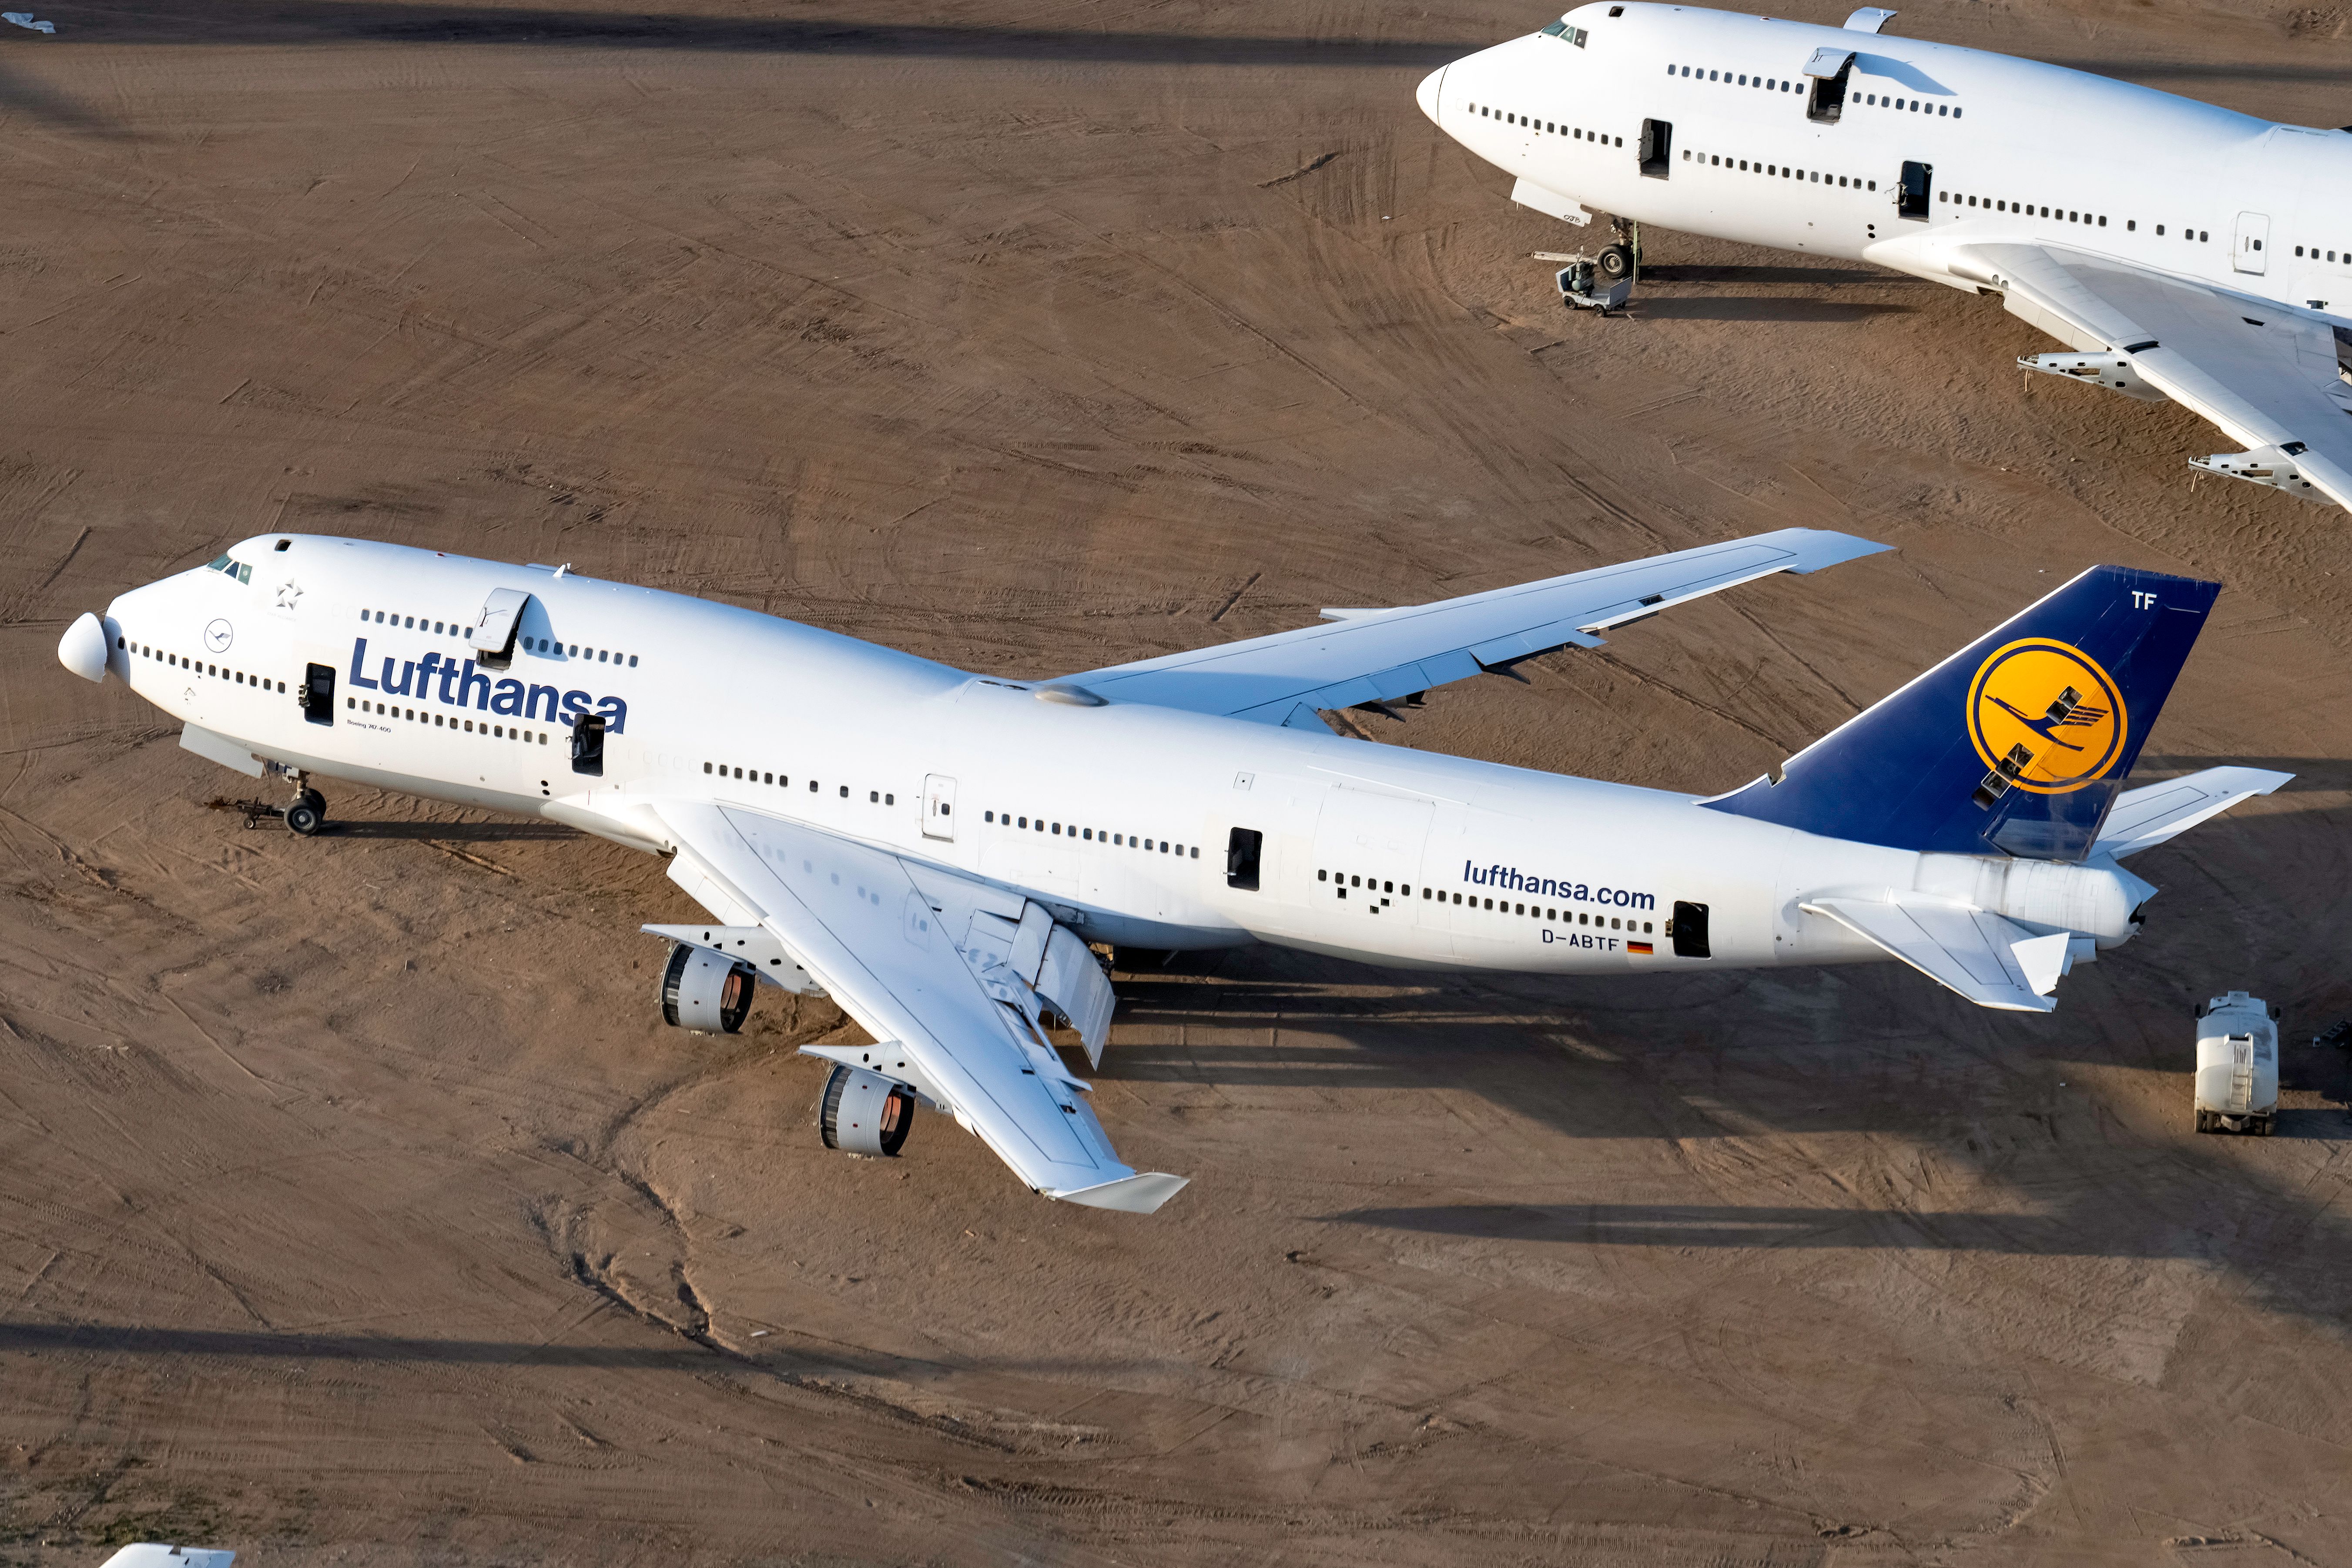 Lufthansa Retired Boeing 747 in desert